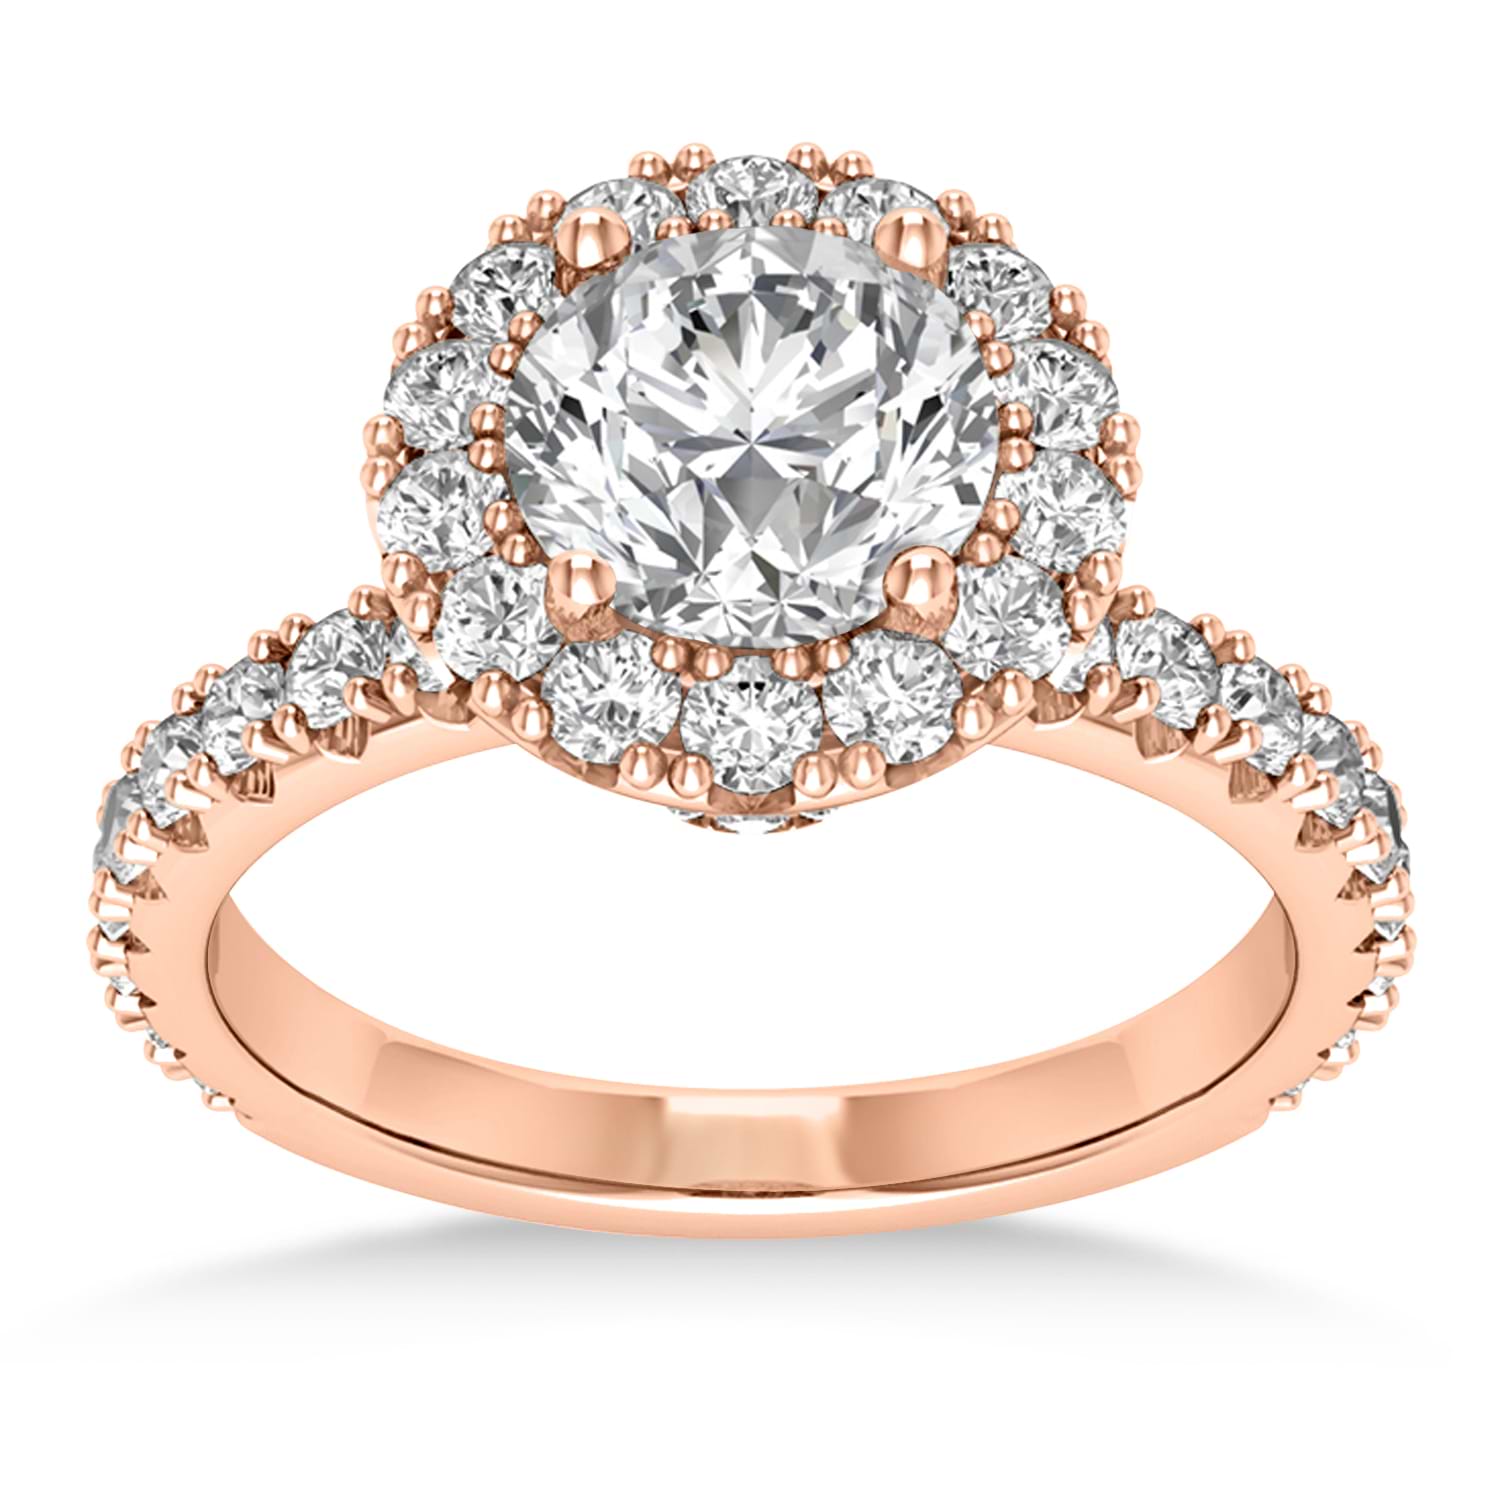 Diamond Halo Engagement Ring 18k Rose Gold (0.90ct)